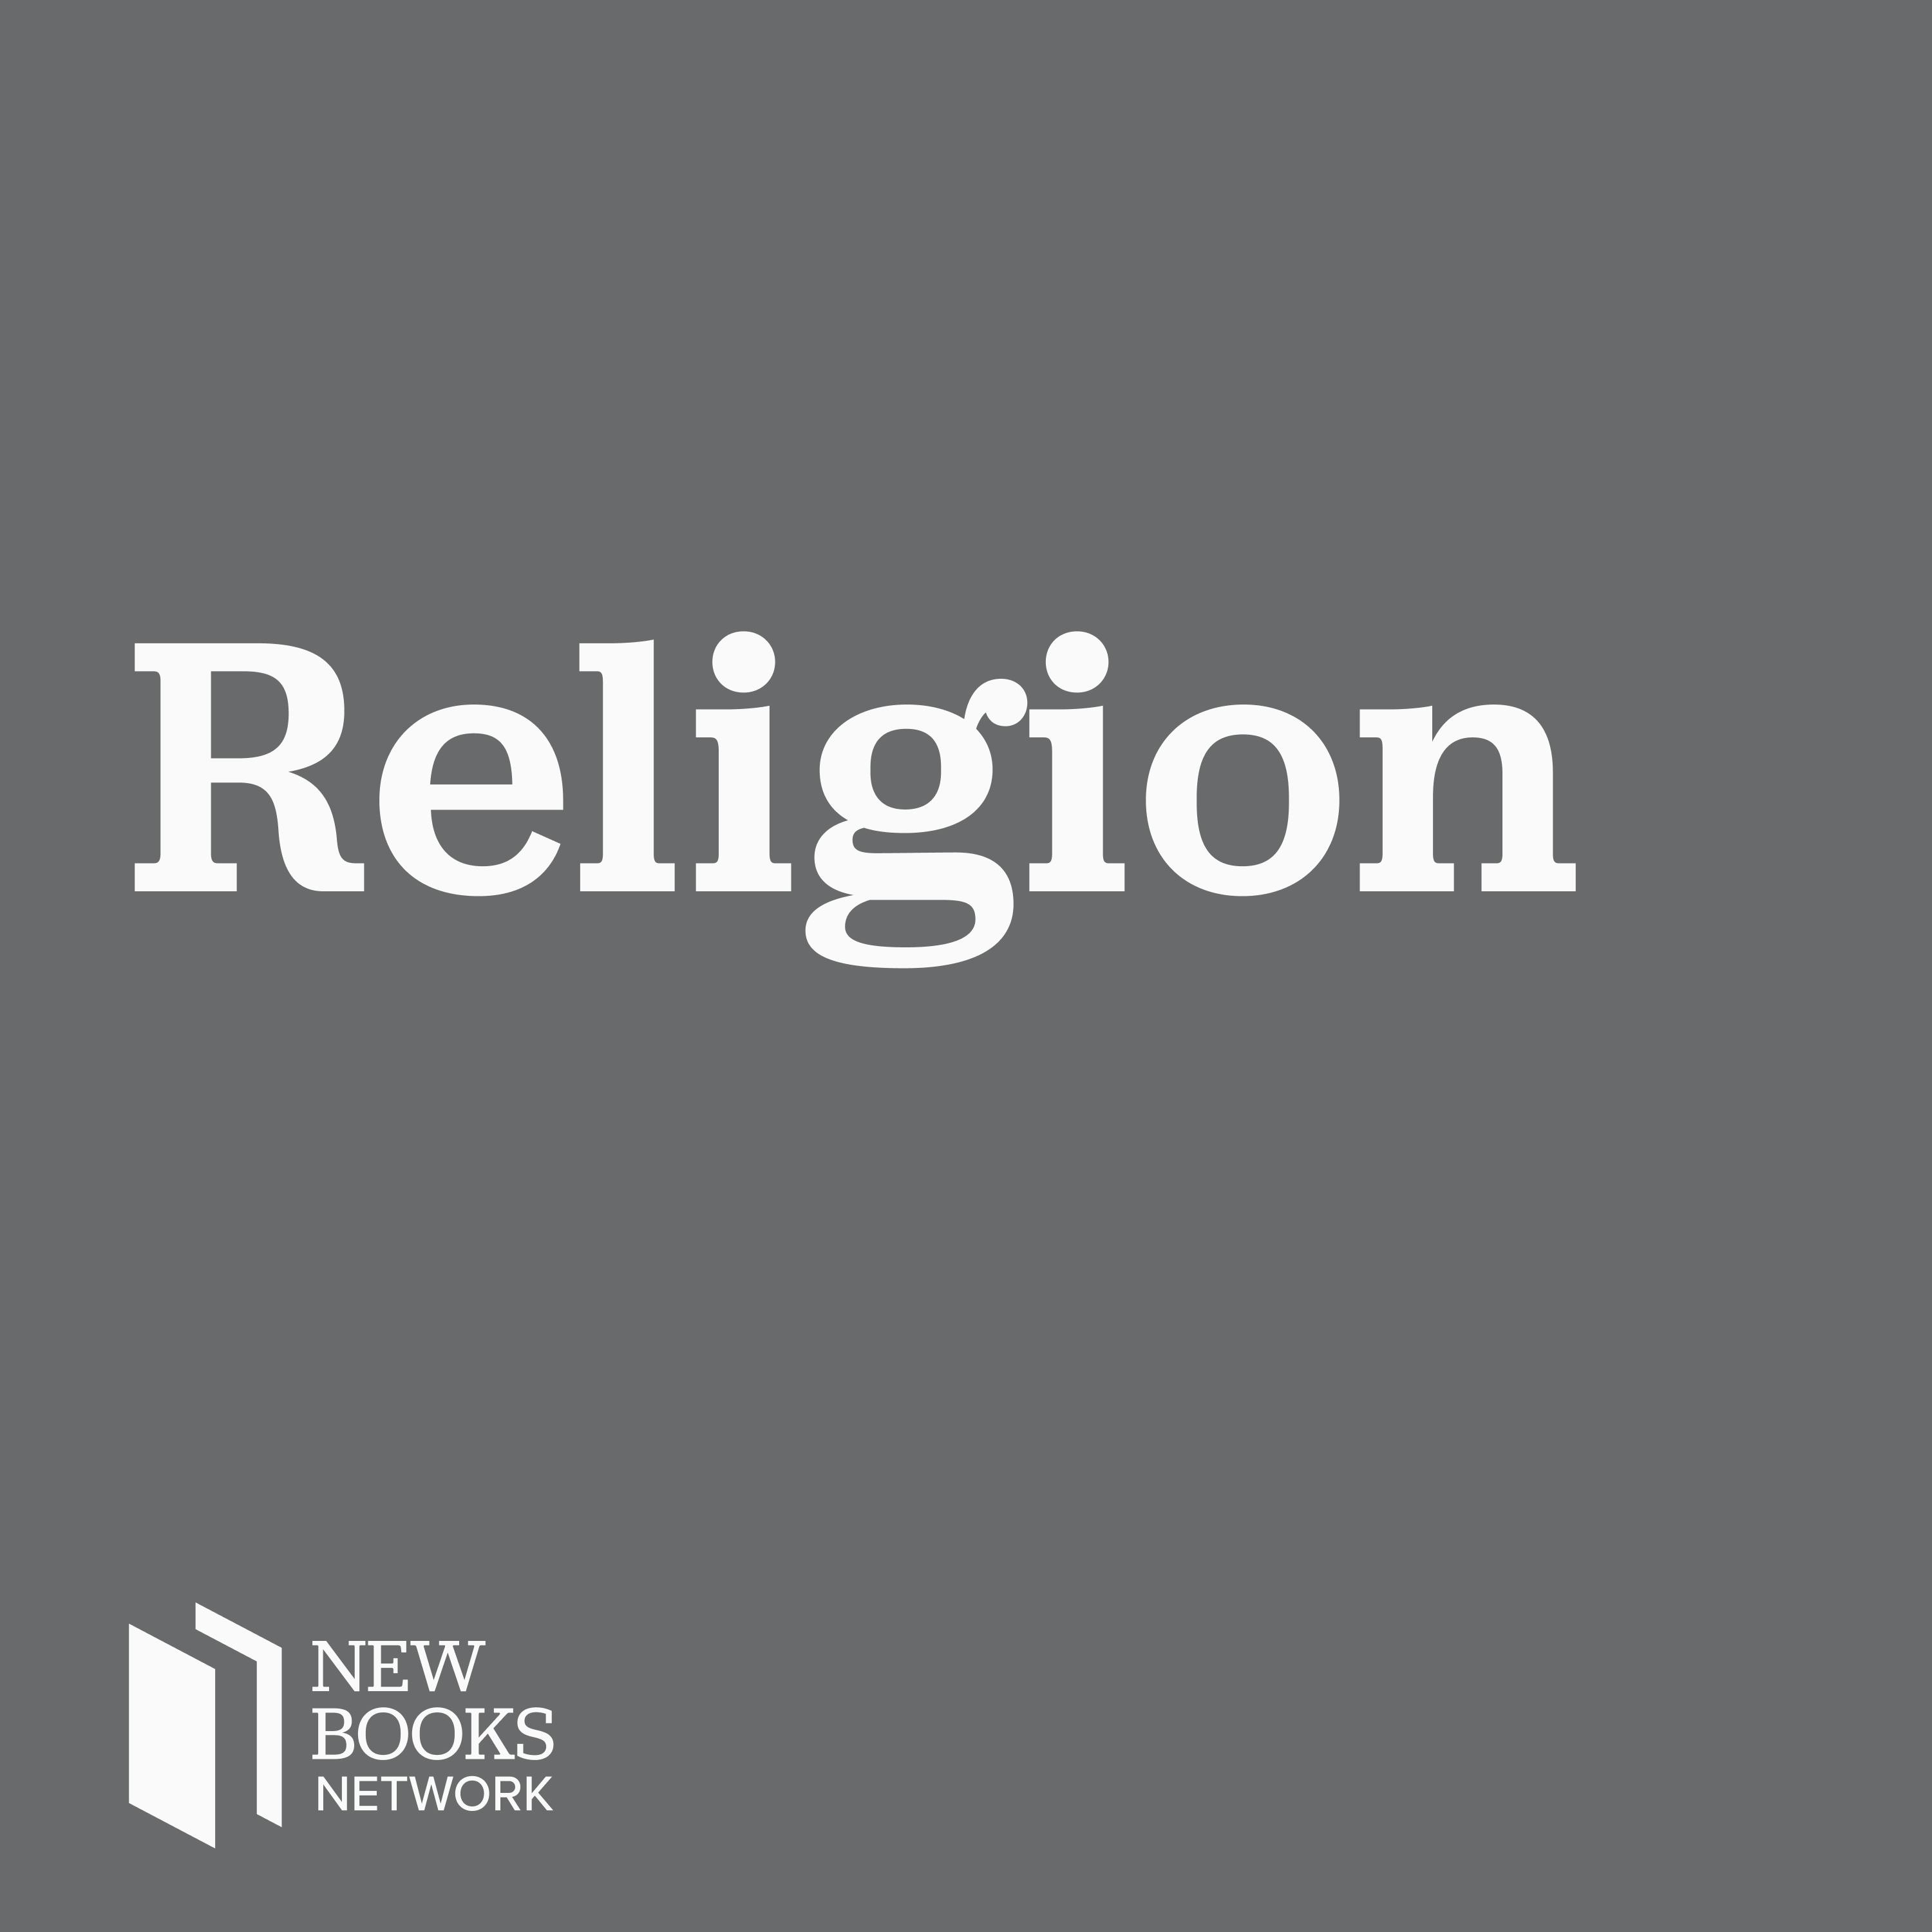 Premium Ad-Free: New Books in Religion podcast tile